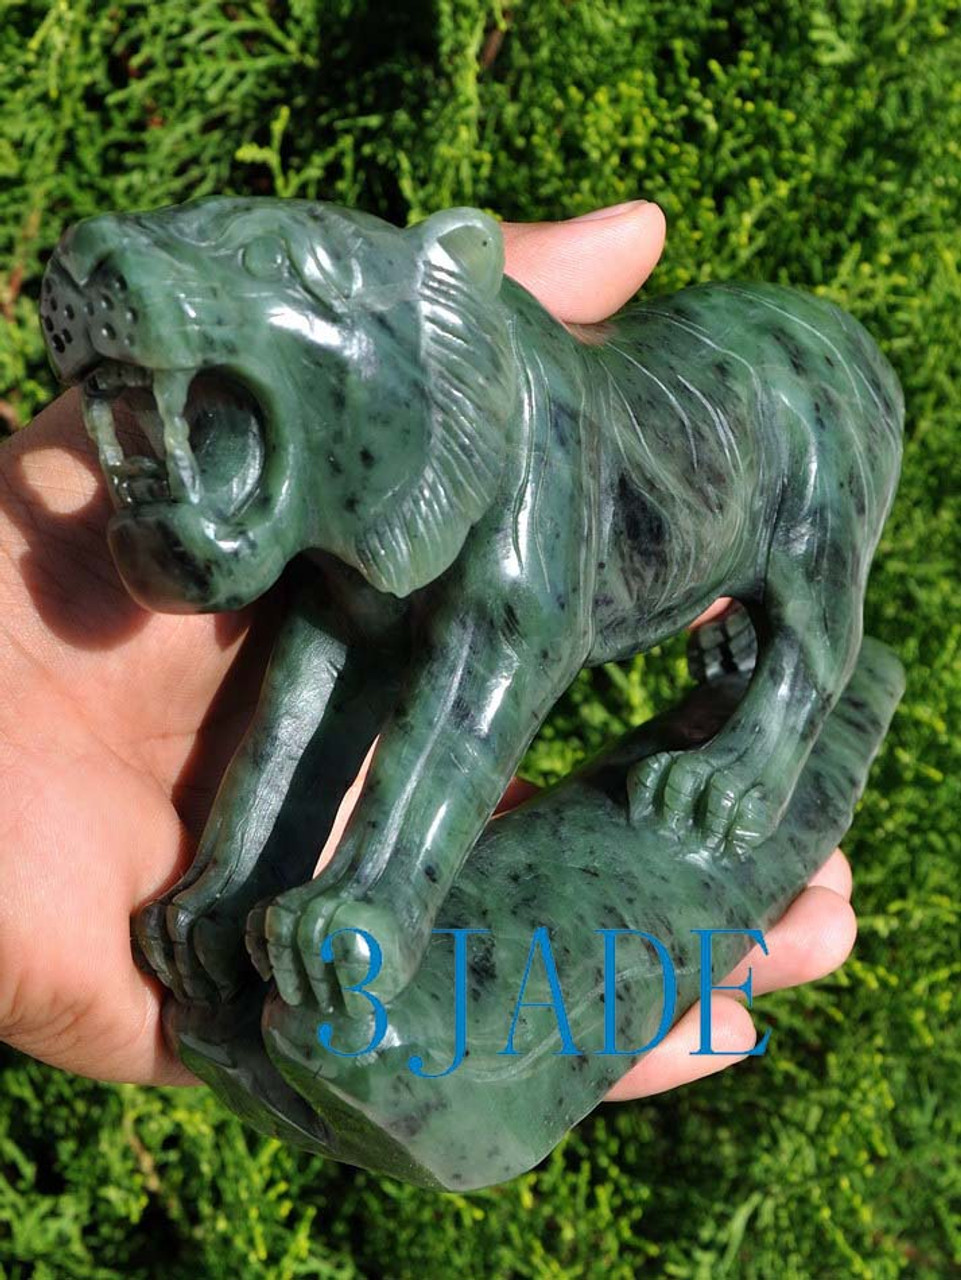 Jade Tiger Sculpture